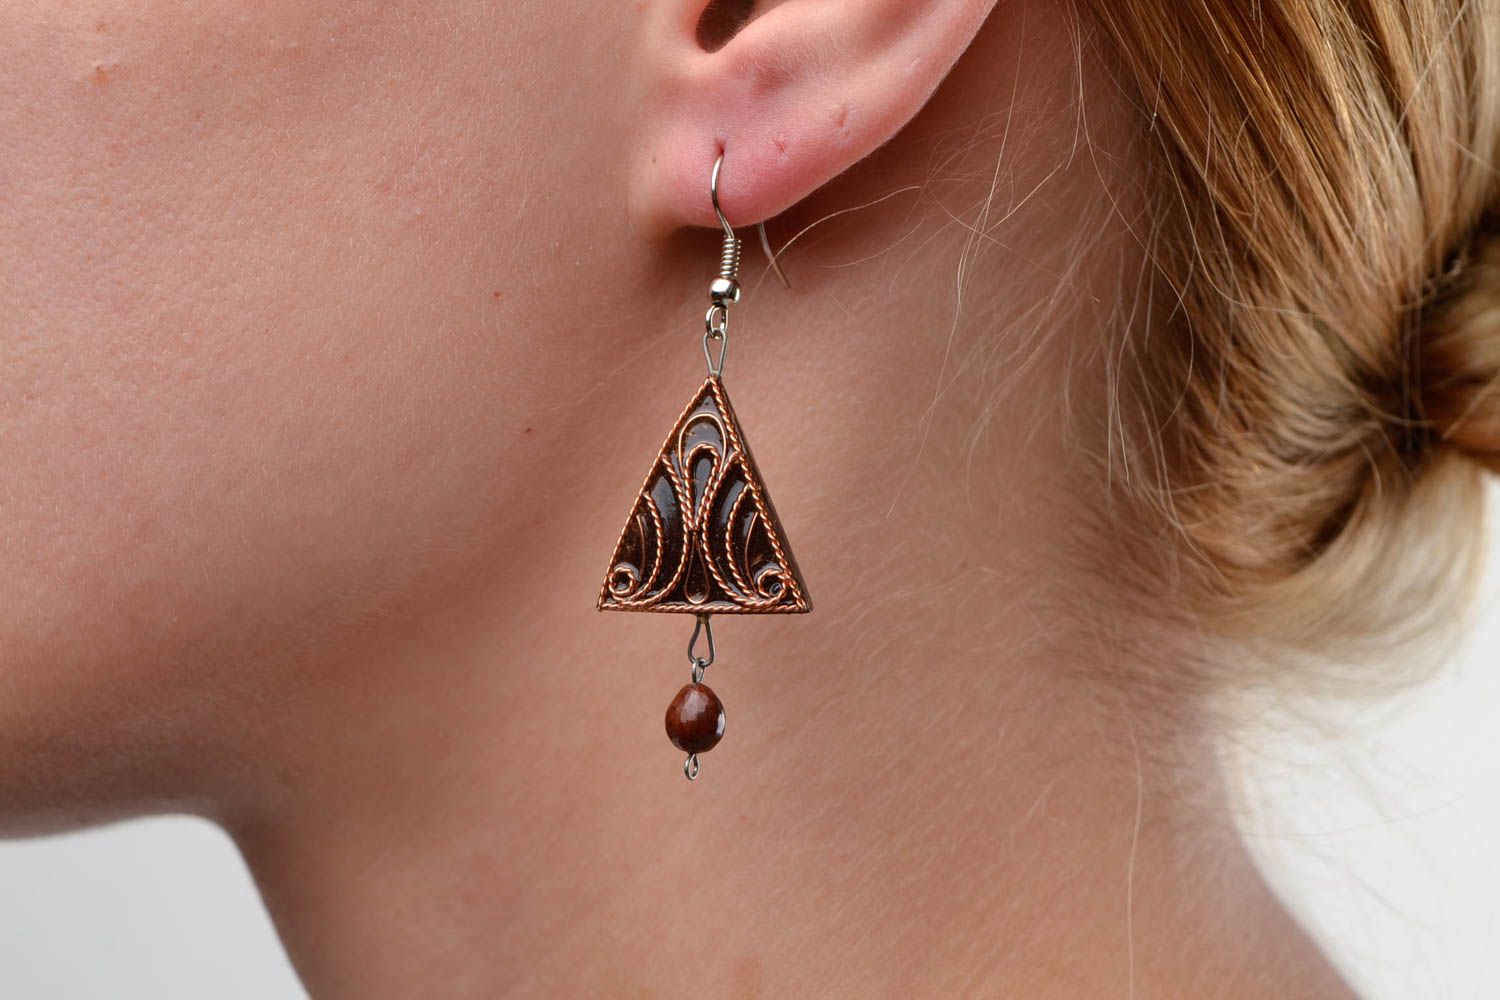 Handmade earrings wood earrings homemade jewelry dangling earrings gifts for her photo 1